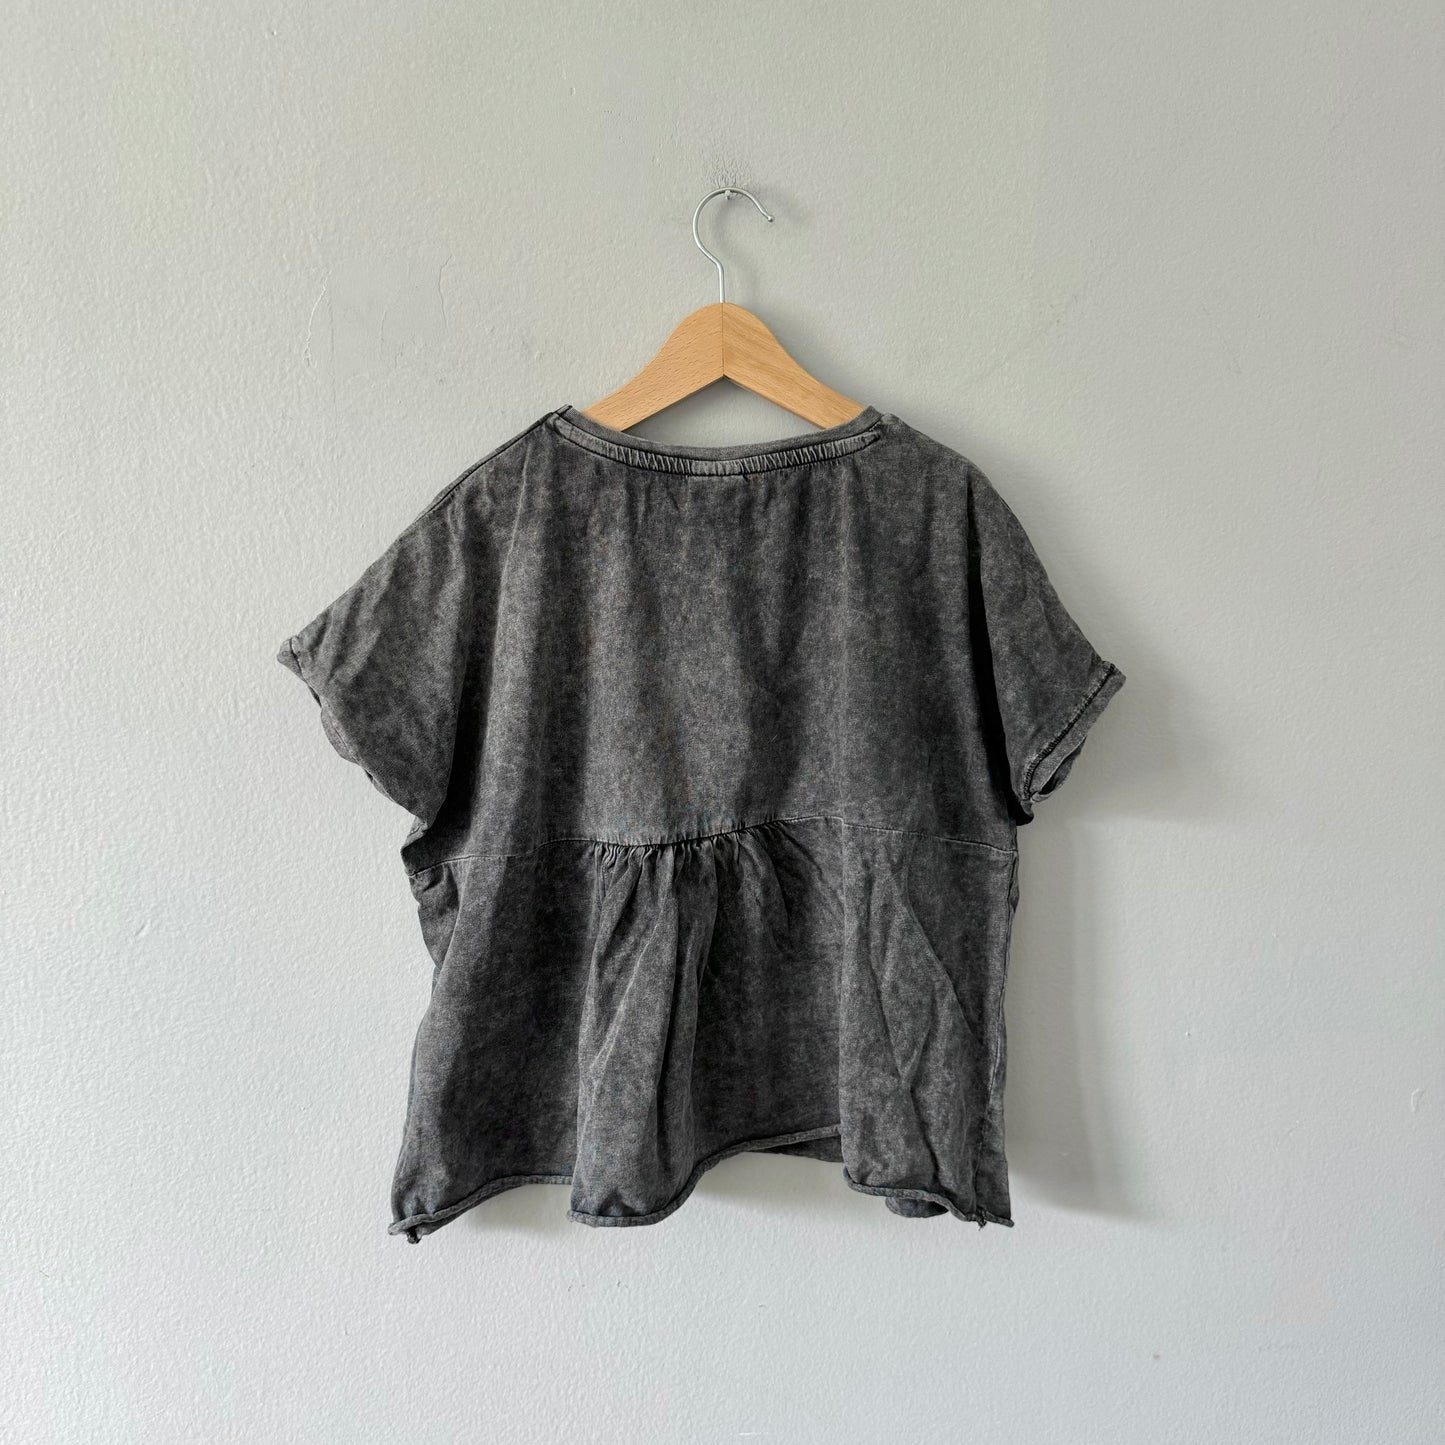 Zara / Black oversized T-shirt / 8Y